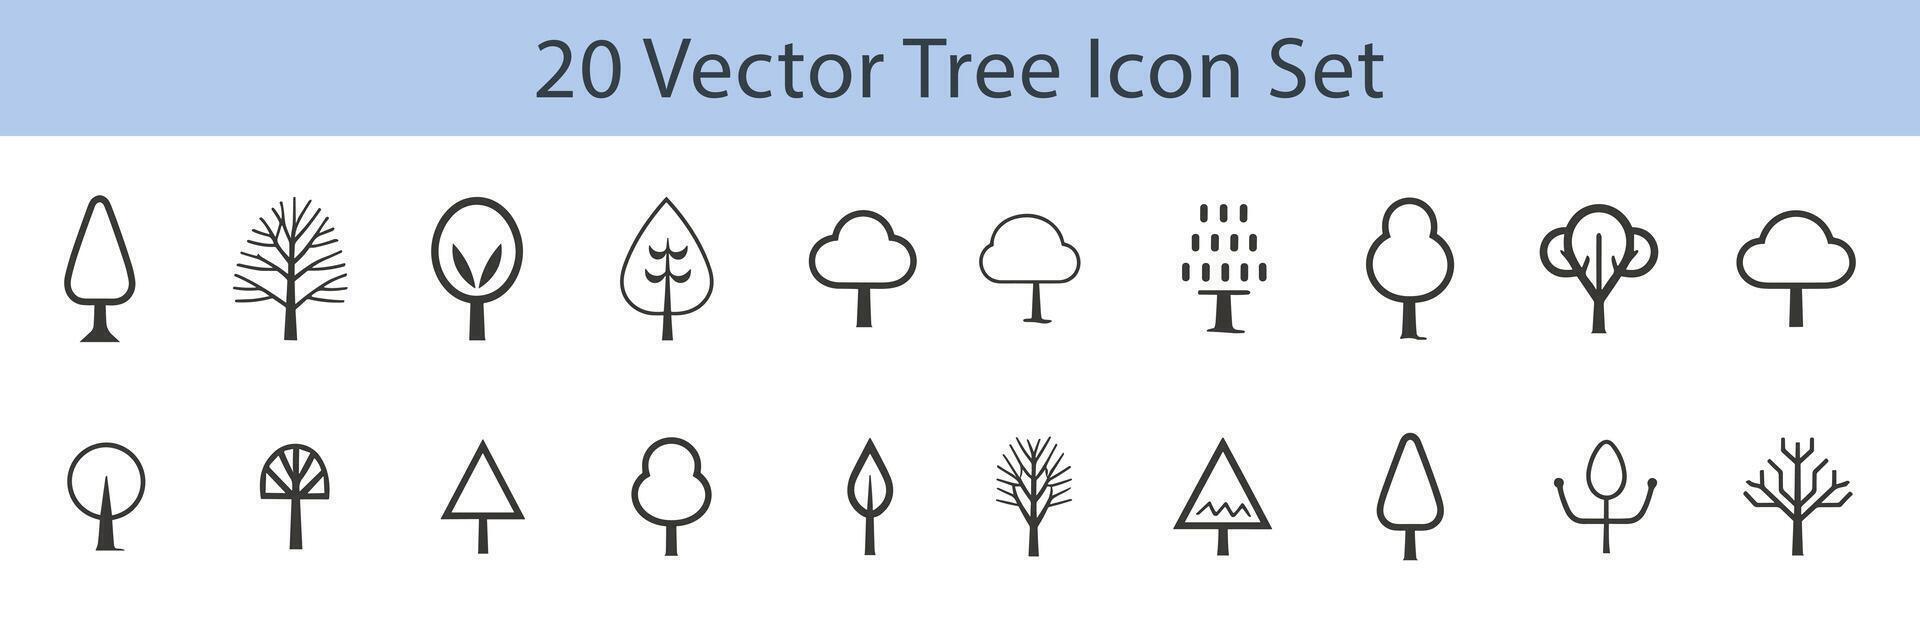 Tree vector icons set